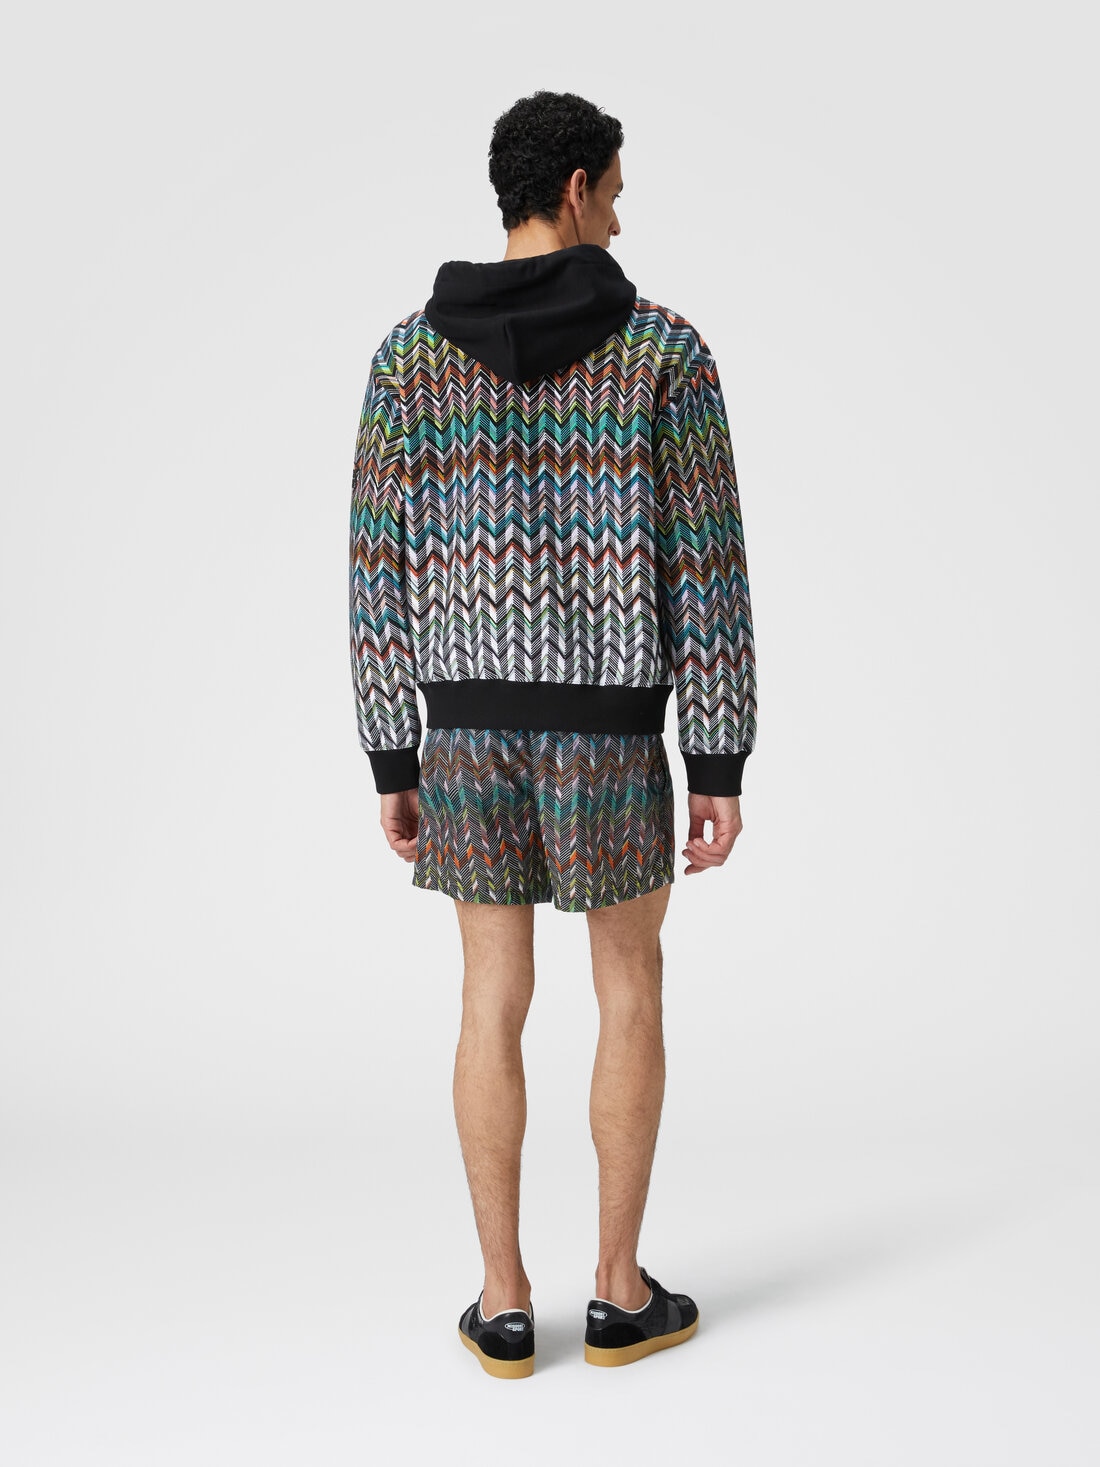 Hooded sweatshirt in zigzag knit , Multicoloured  - TS24SW05BC0047S91J3 - 2